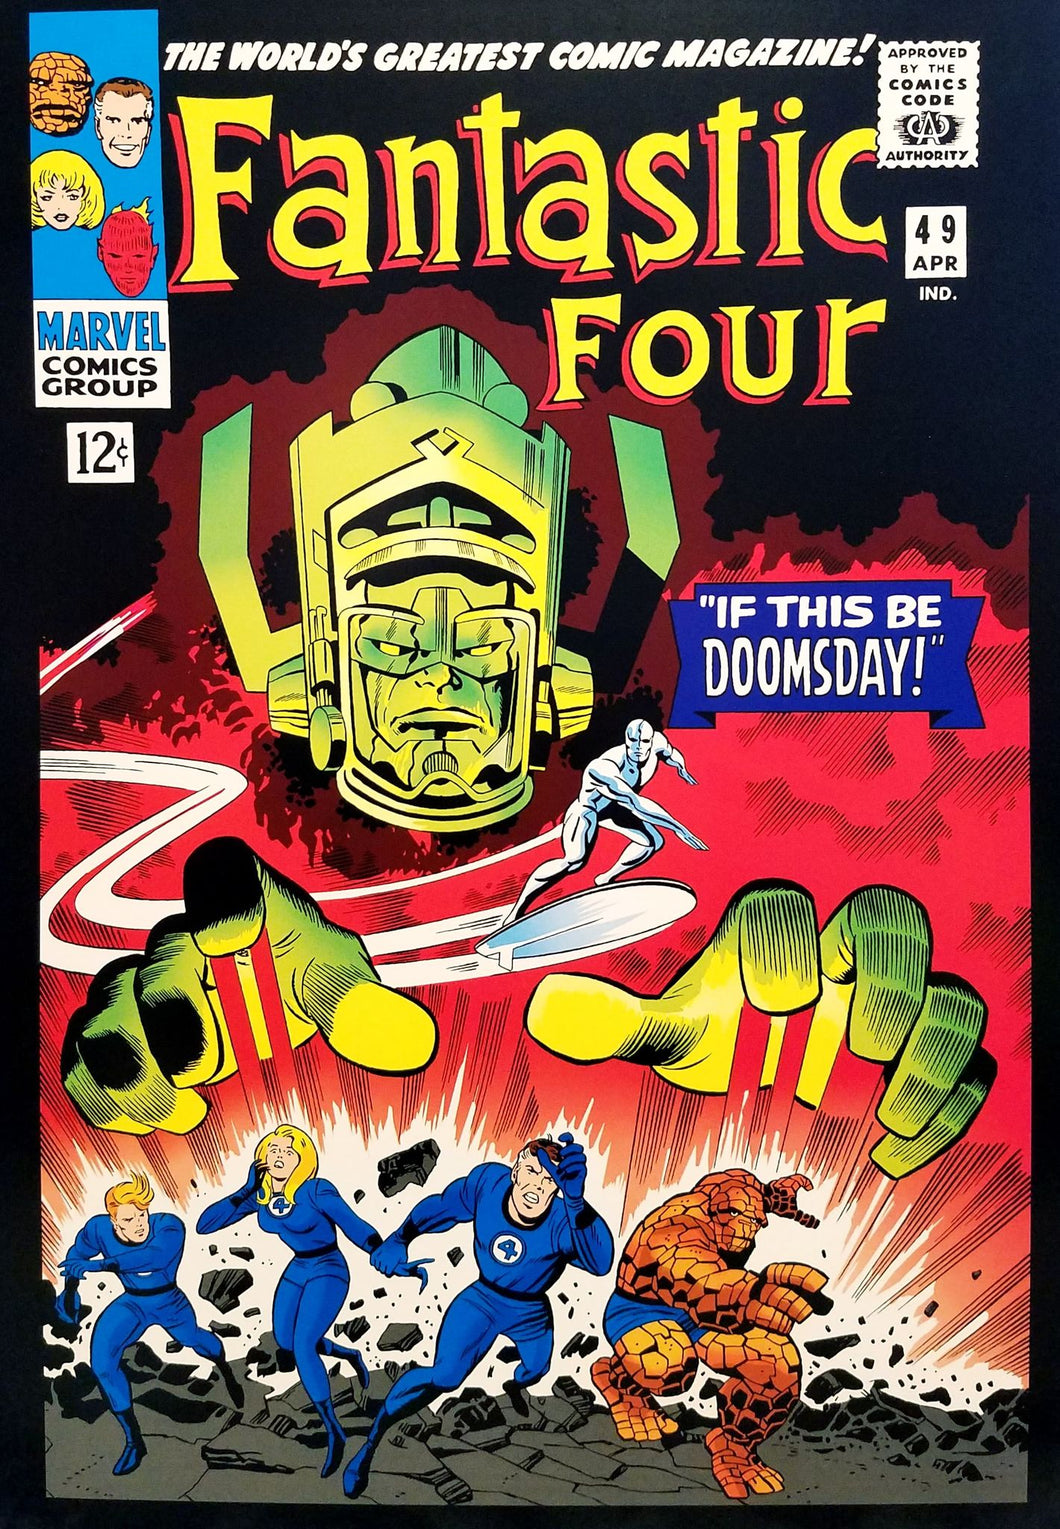 Fantastic Four #49 12x16 FRAMED Art Print by Jack Kirby (Galactus 1966), New Marvel Comics cardstock